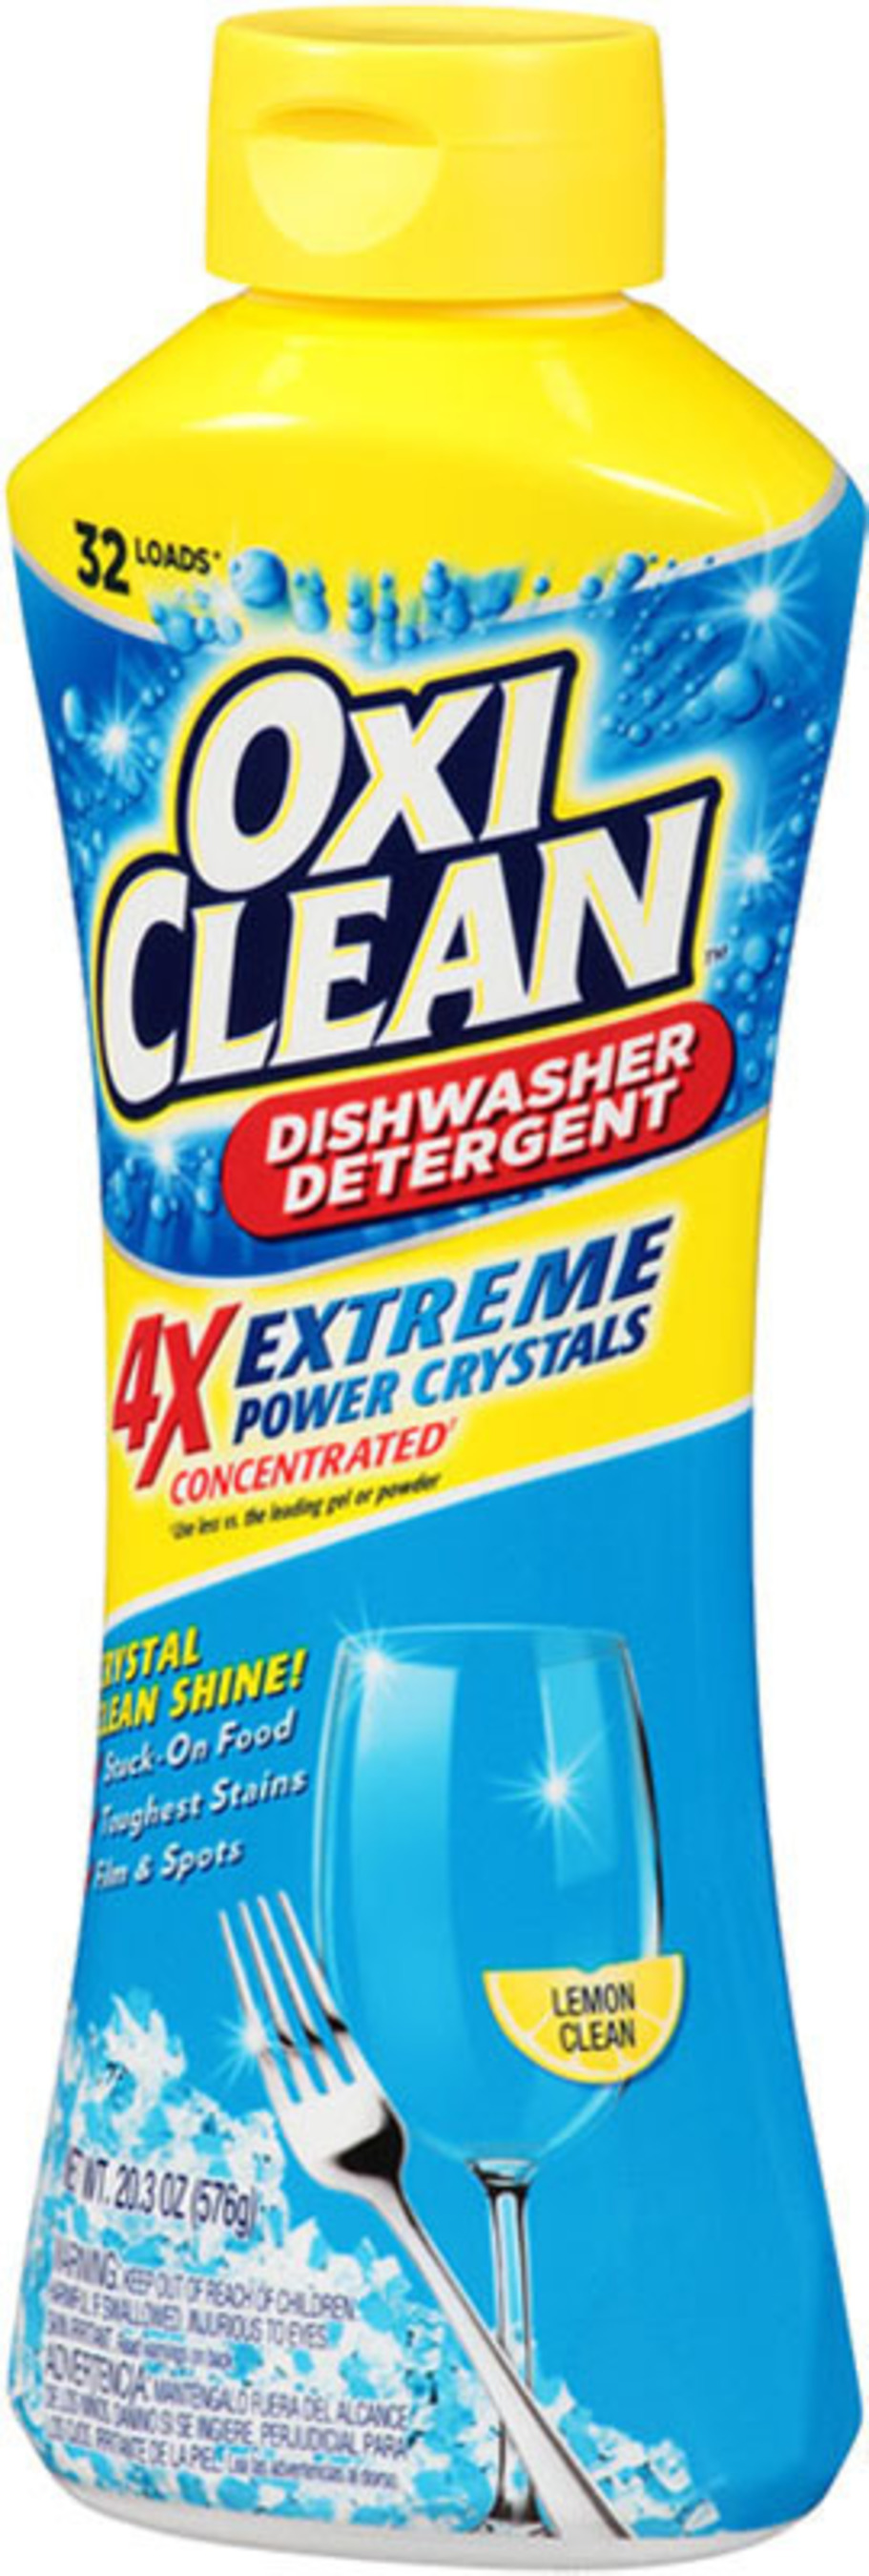 NEW OxiClean Extreme Power Crystals Dishwasher Detergent. (PRNewsFoto/CHURCH _ DWIGHT CO__ INC_)